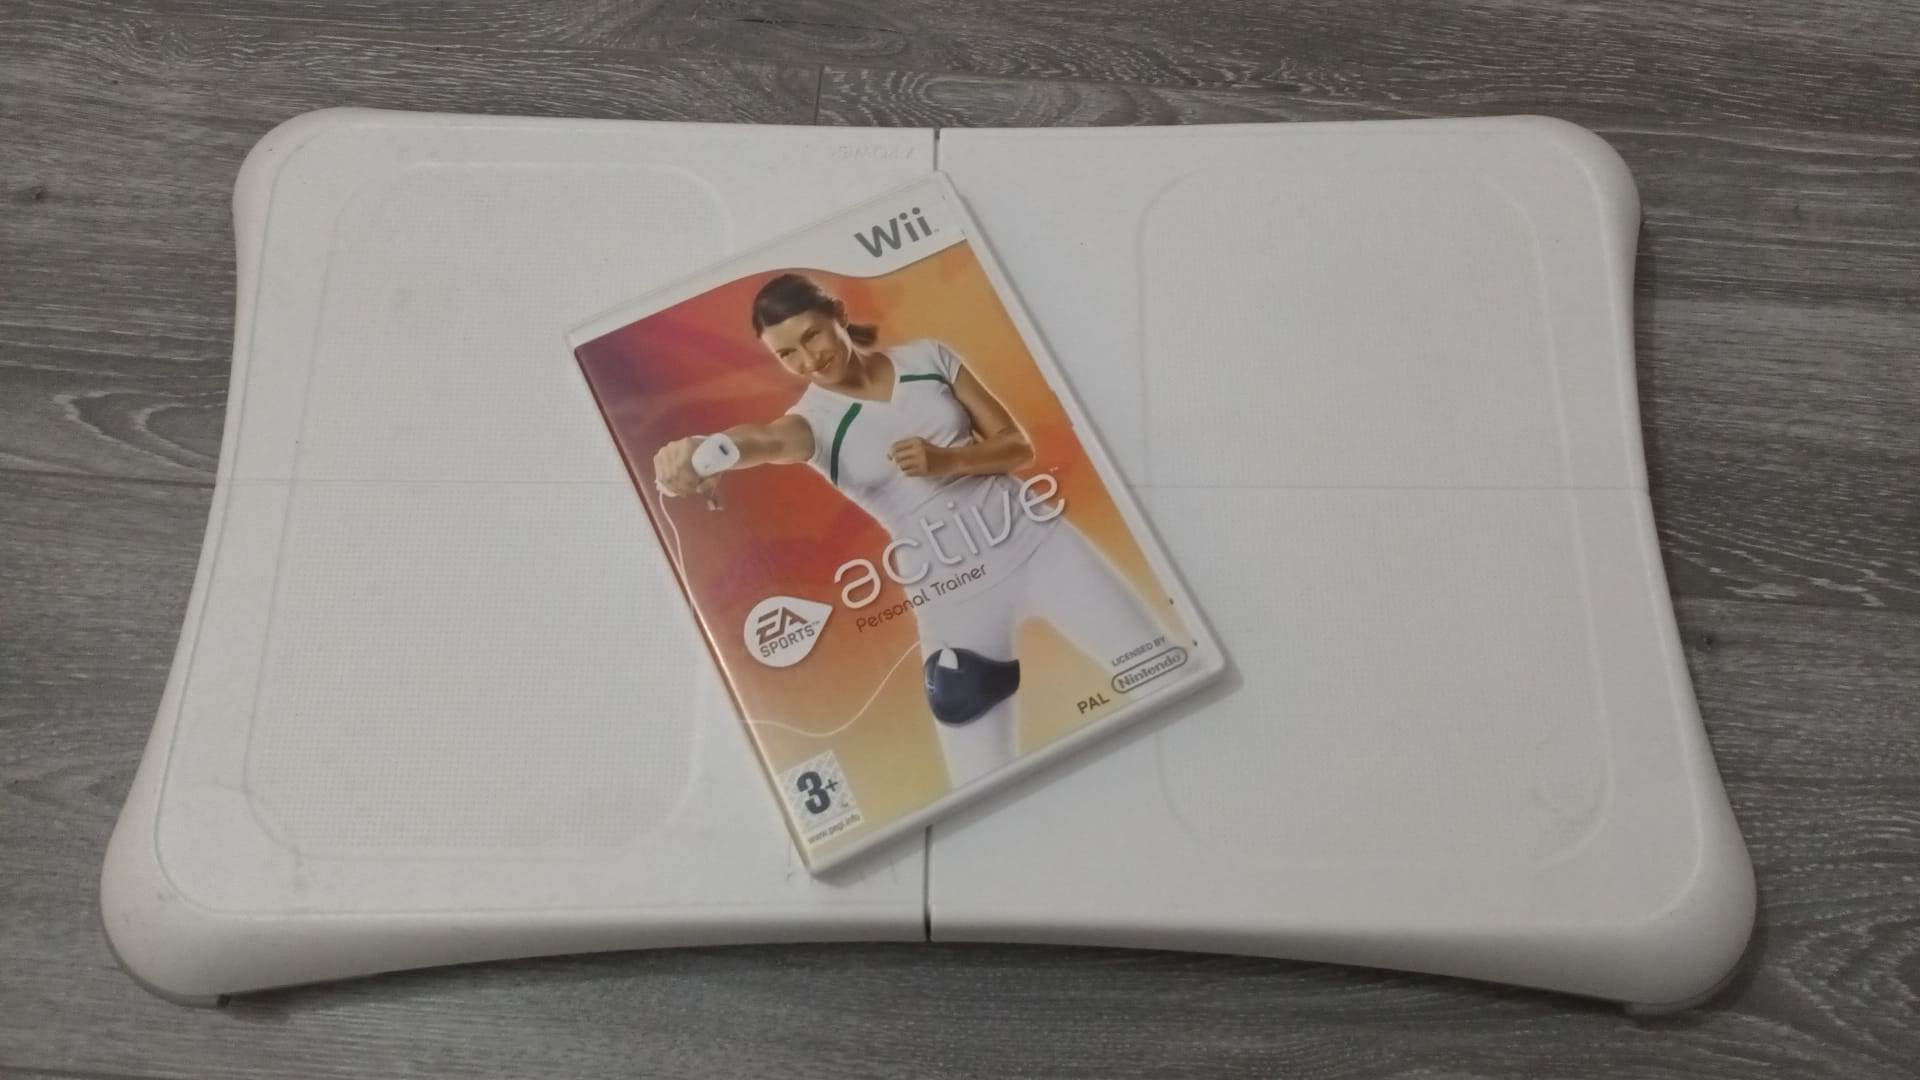 Wii Fit Ballance Board + EA Sports Active - Nintendo Wii